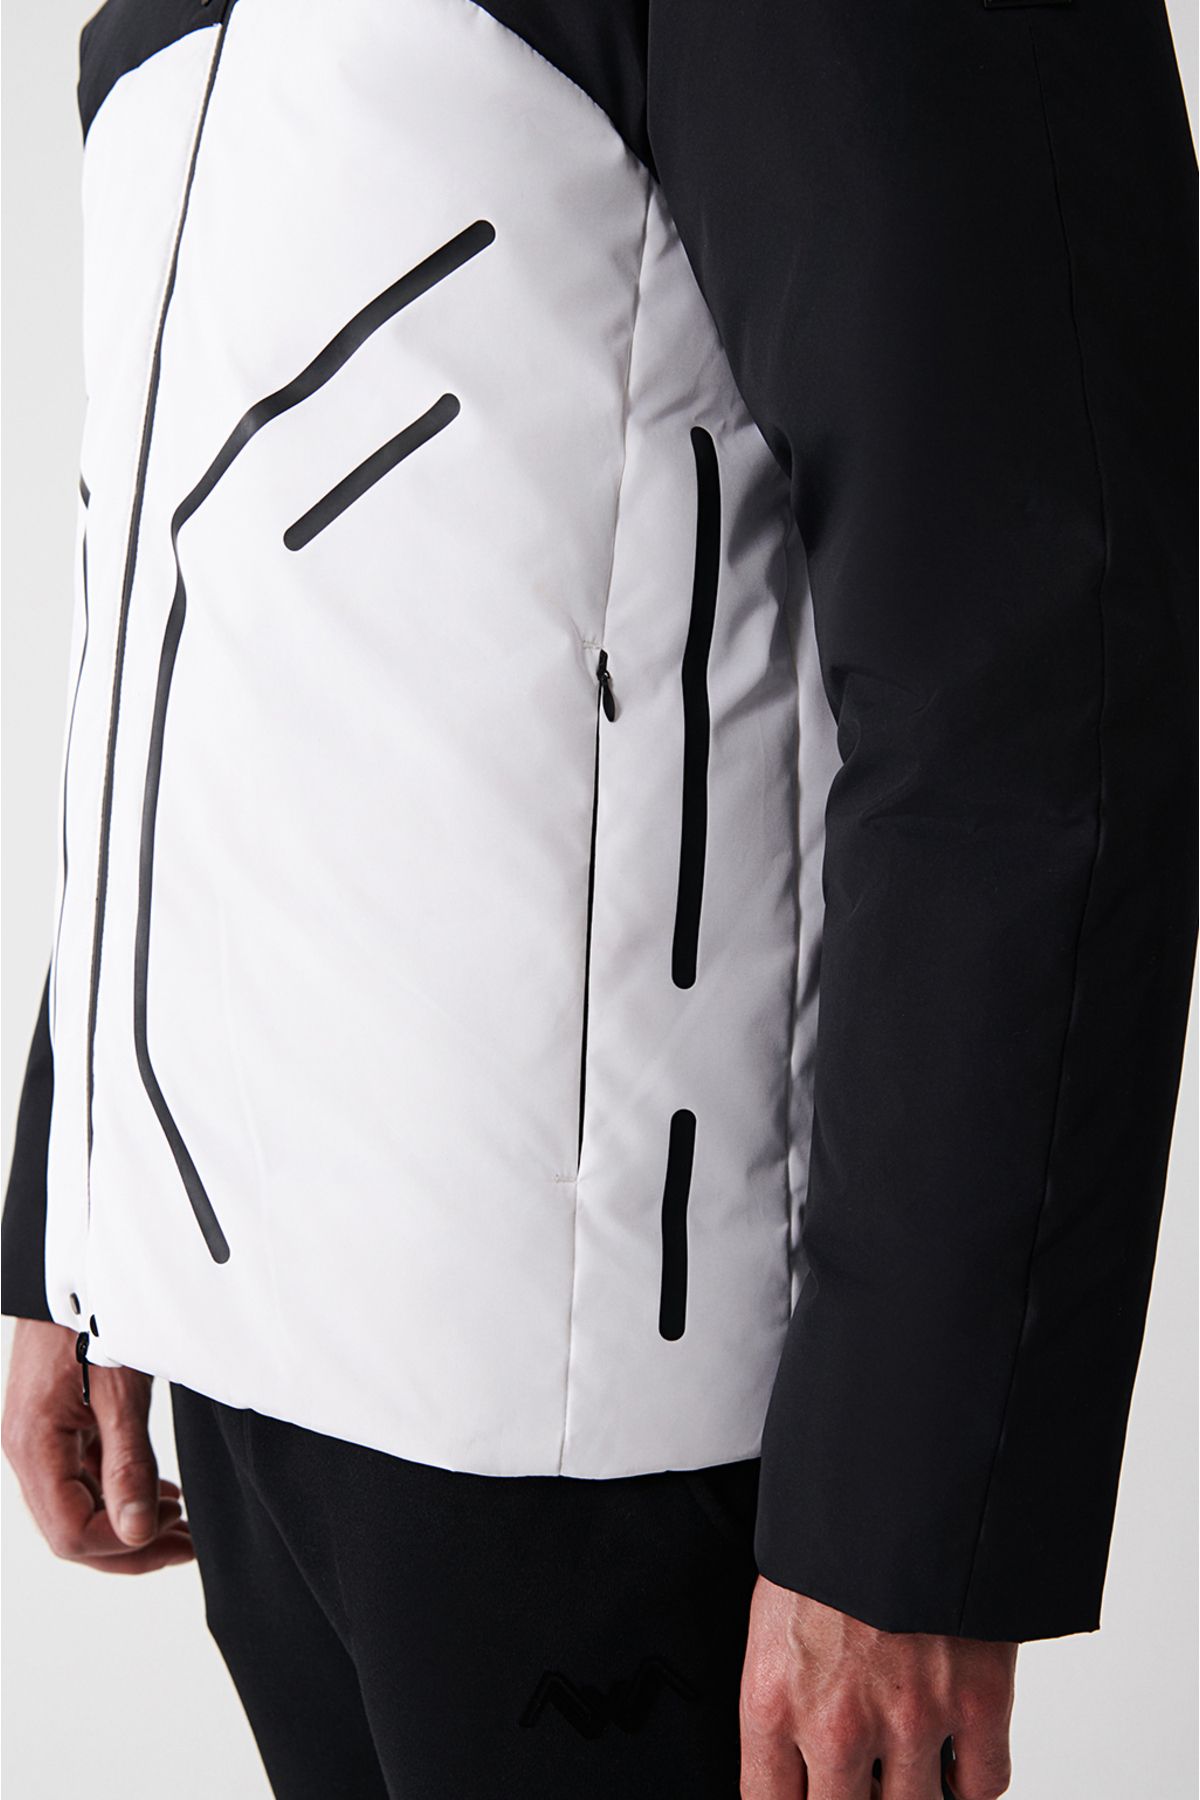 Avva کت سیاه و سفید مردان کاوش شده با آب محرک ضد باد پنهان یقه به طور قاطع A32Y6045